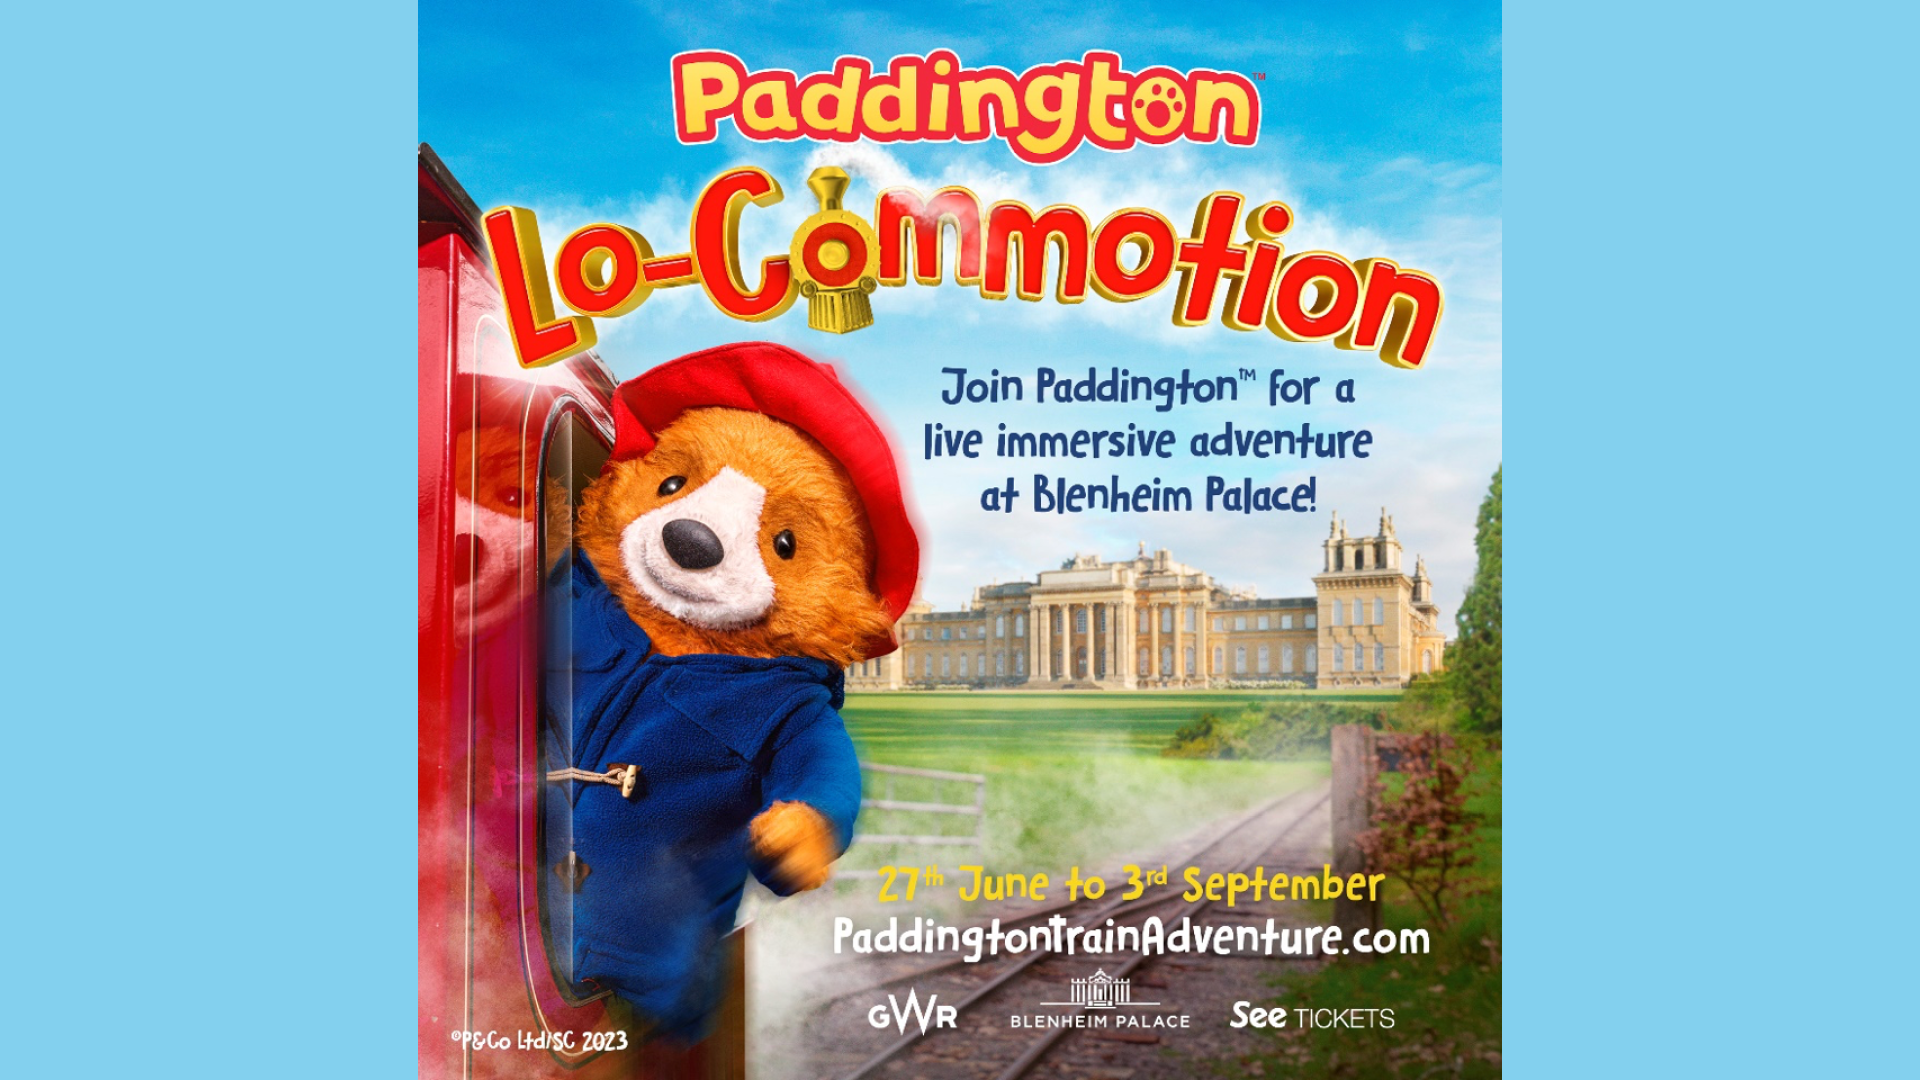 “Paddington Lo-Commotion” promotional picture.